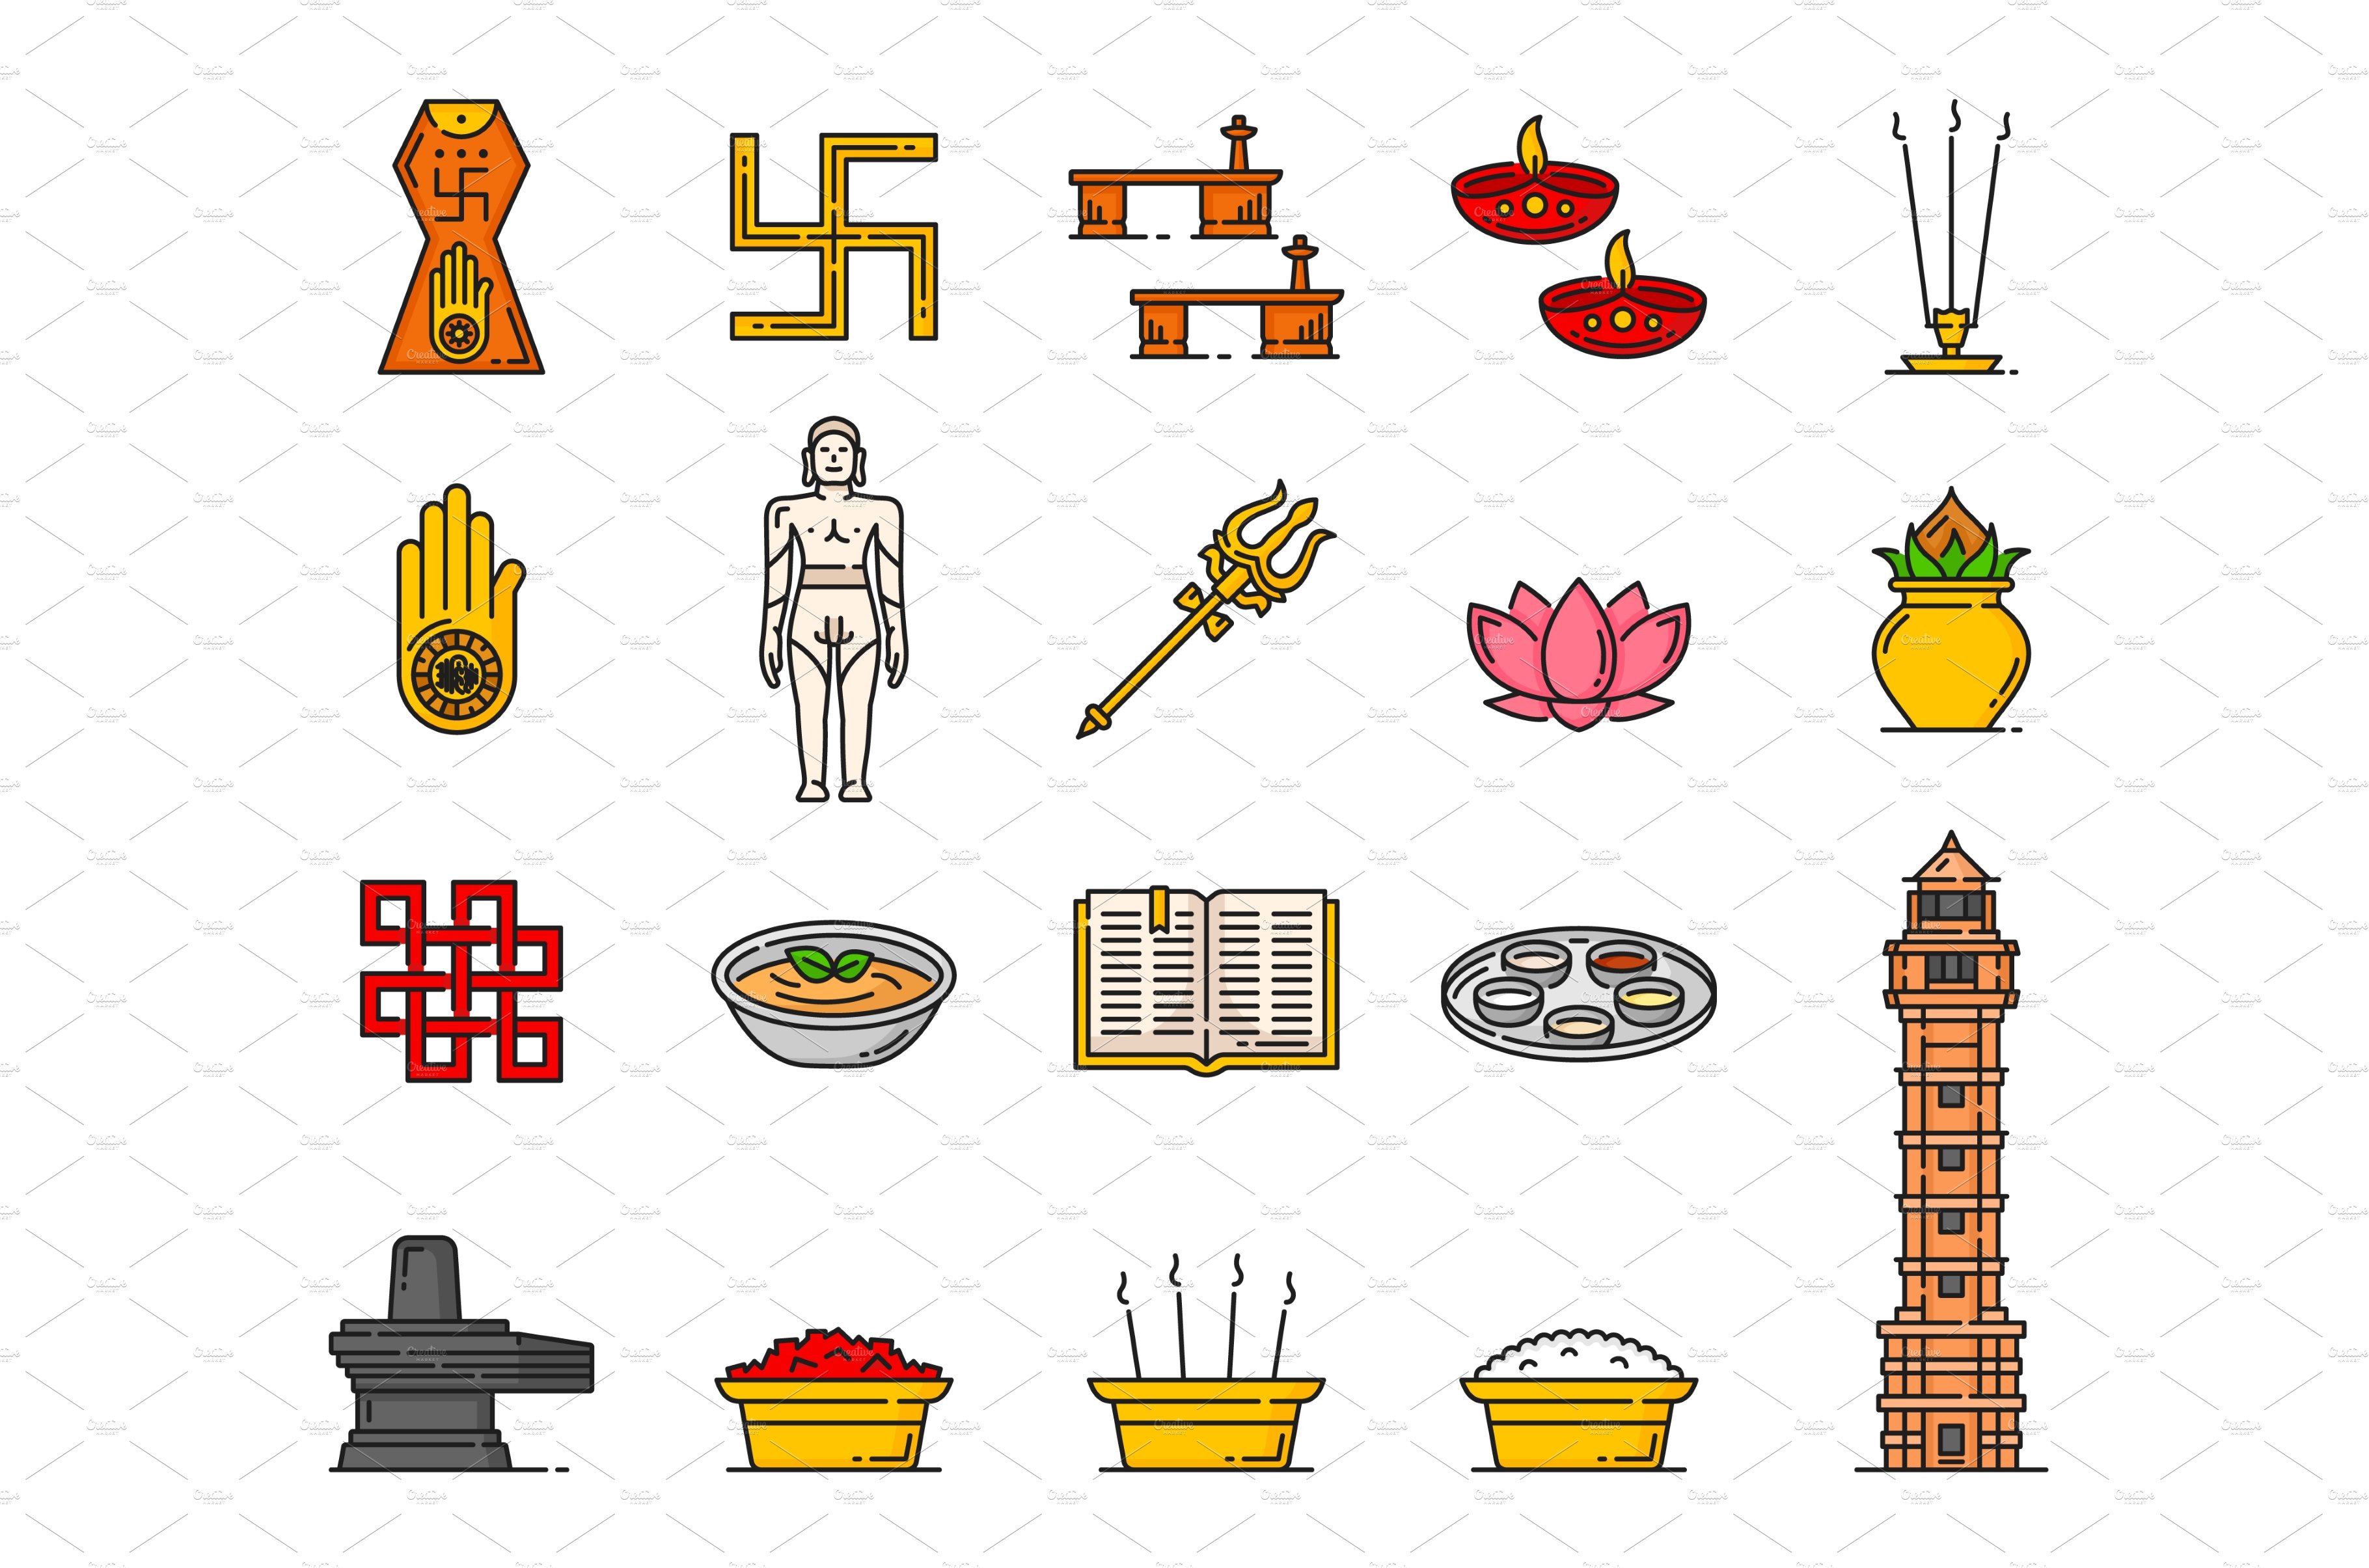 Jainism religion icons cover image.